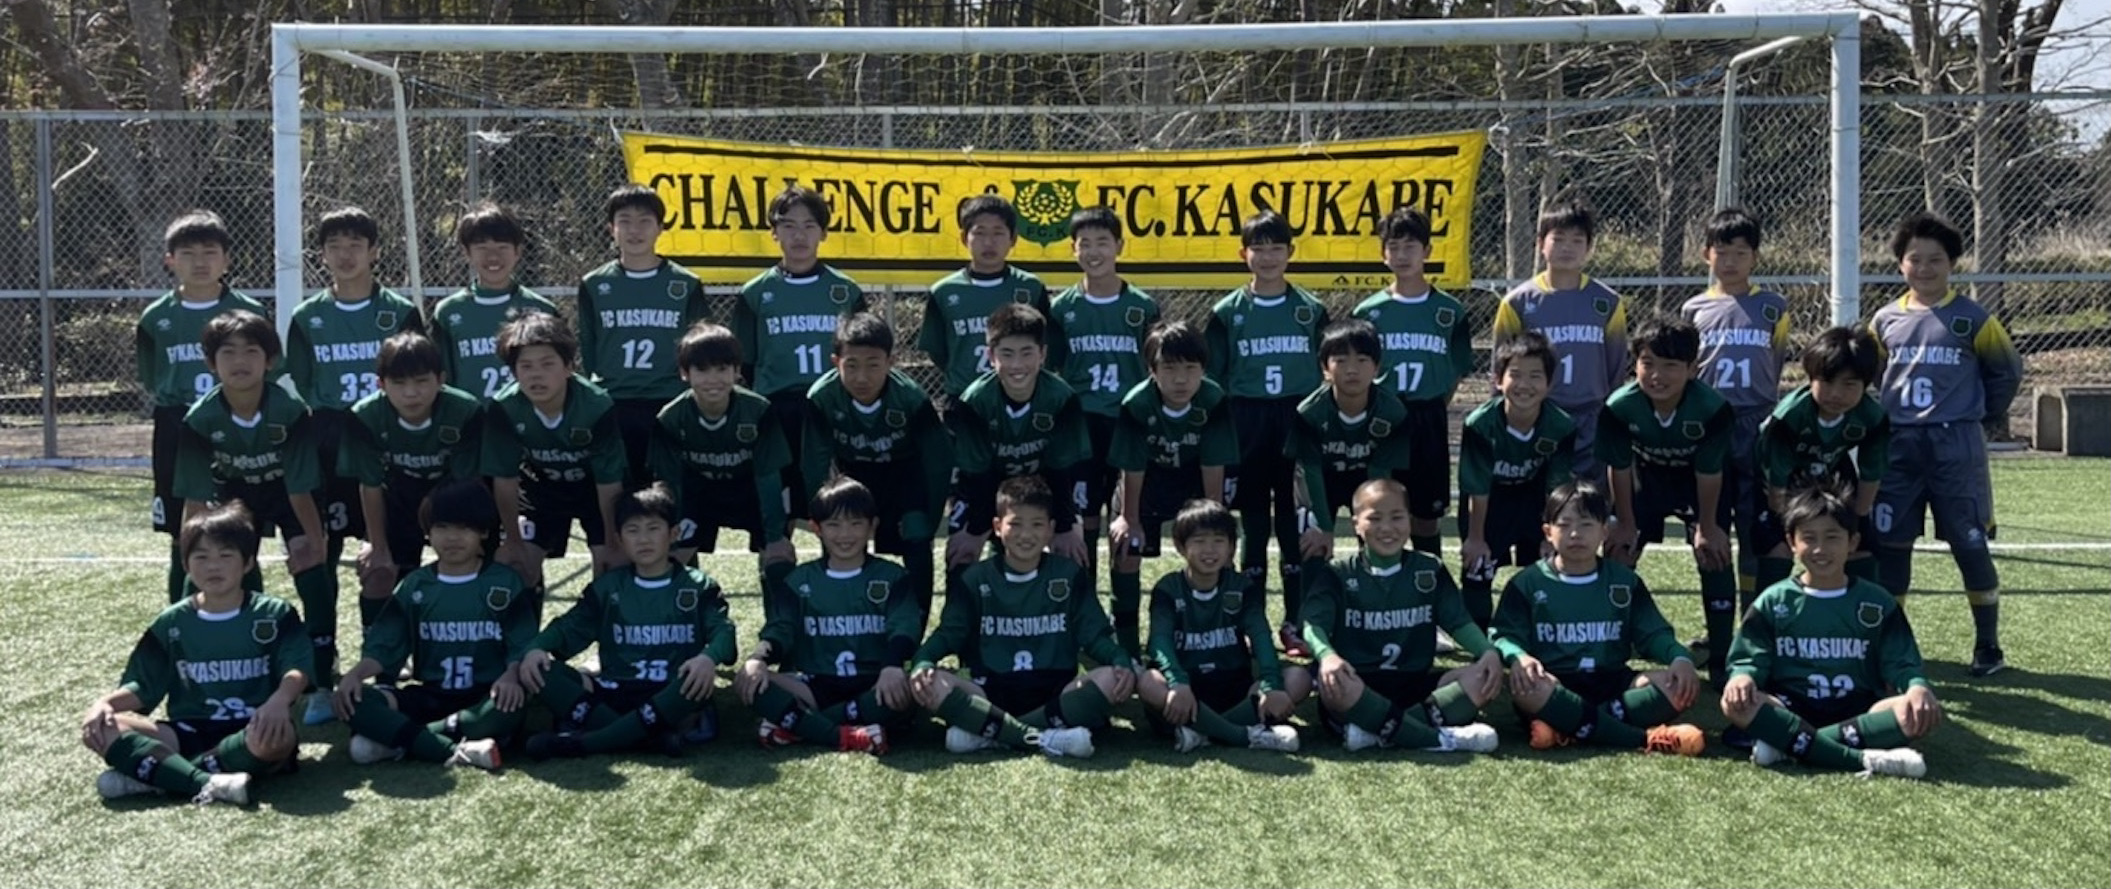 Fckasukabe 埼玉県春日部市を本拠地とするサッカークラブ Fc Kasukabeのオフィシャルホームページです